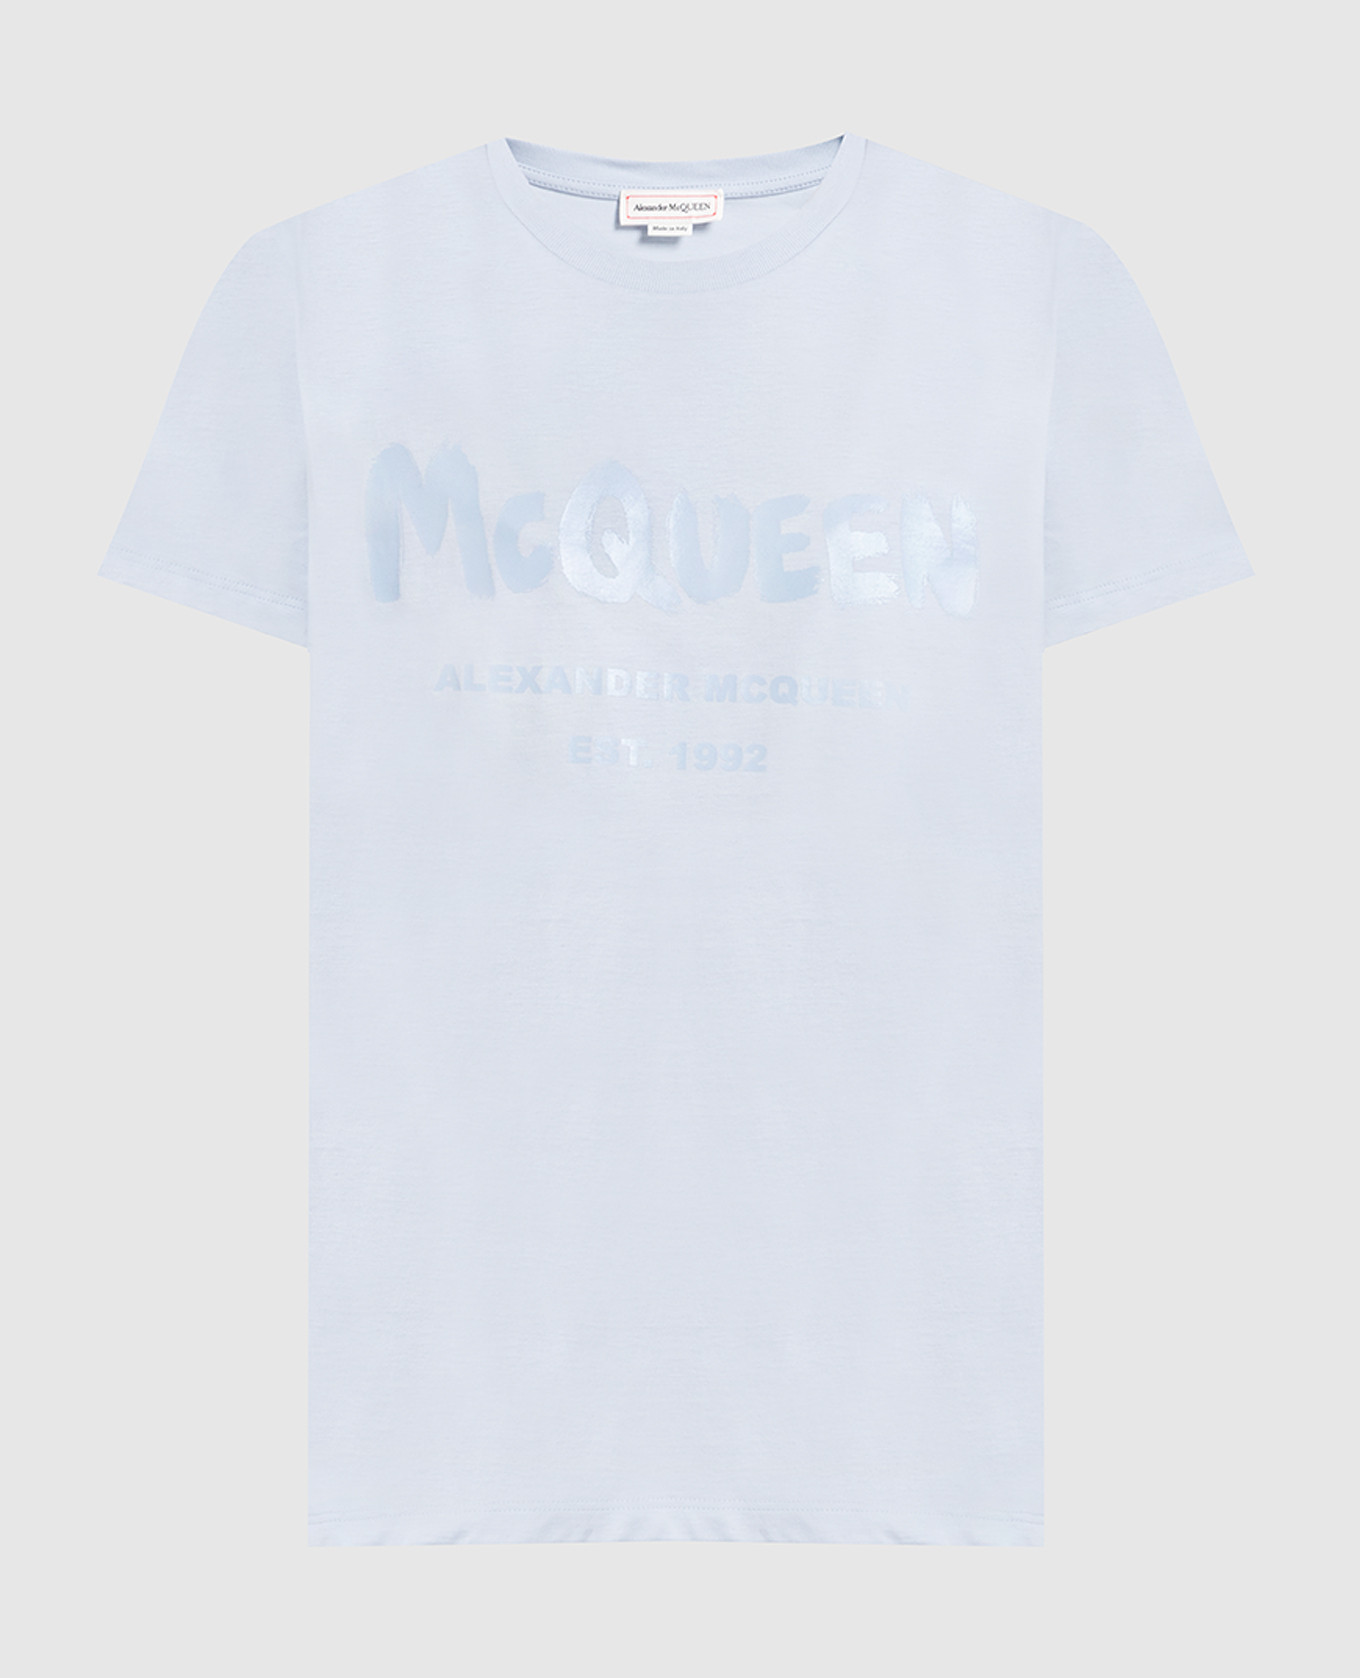 Blue t-shirt with McQueen Graffiti print